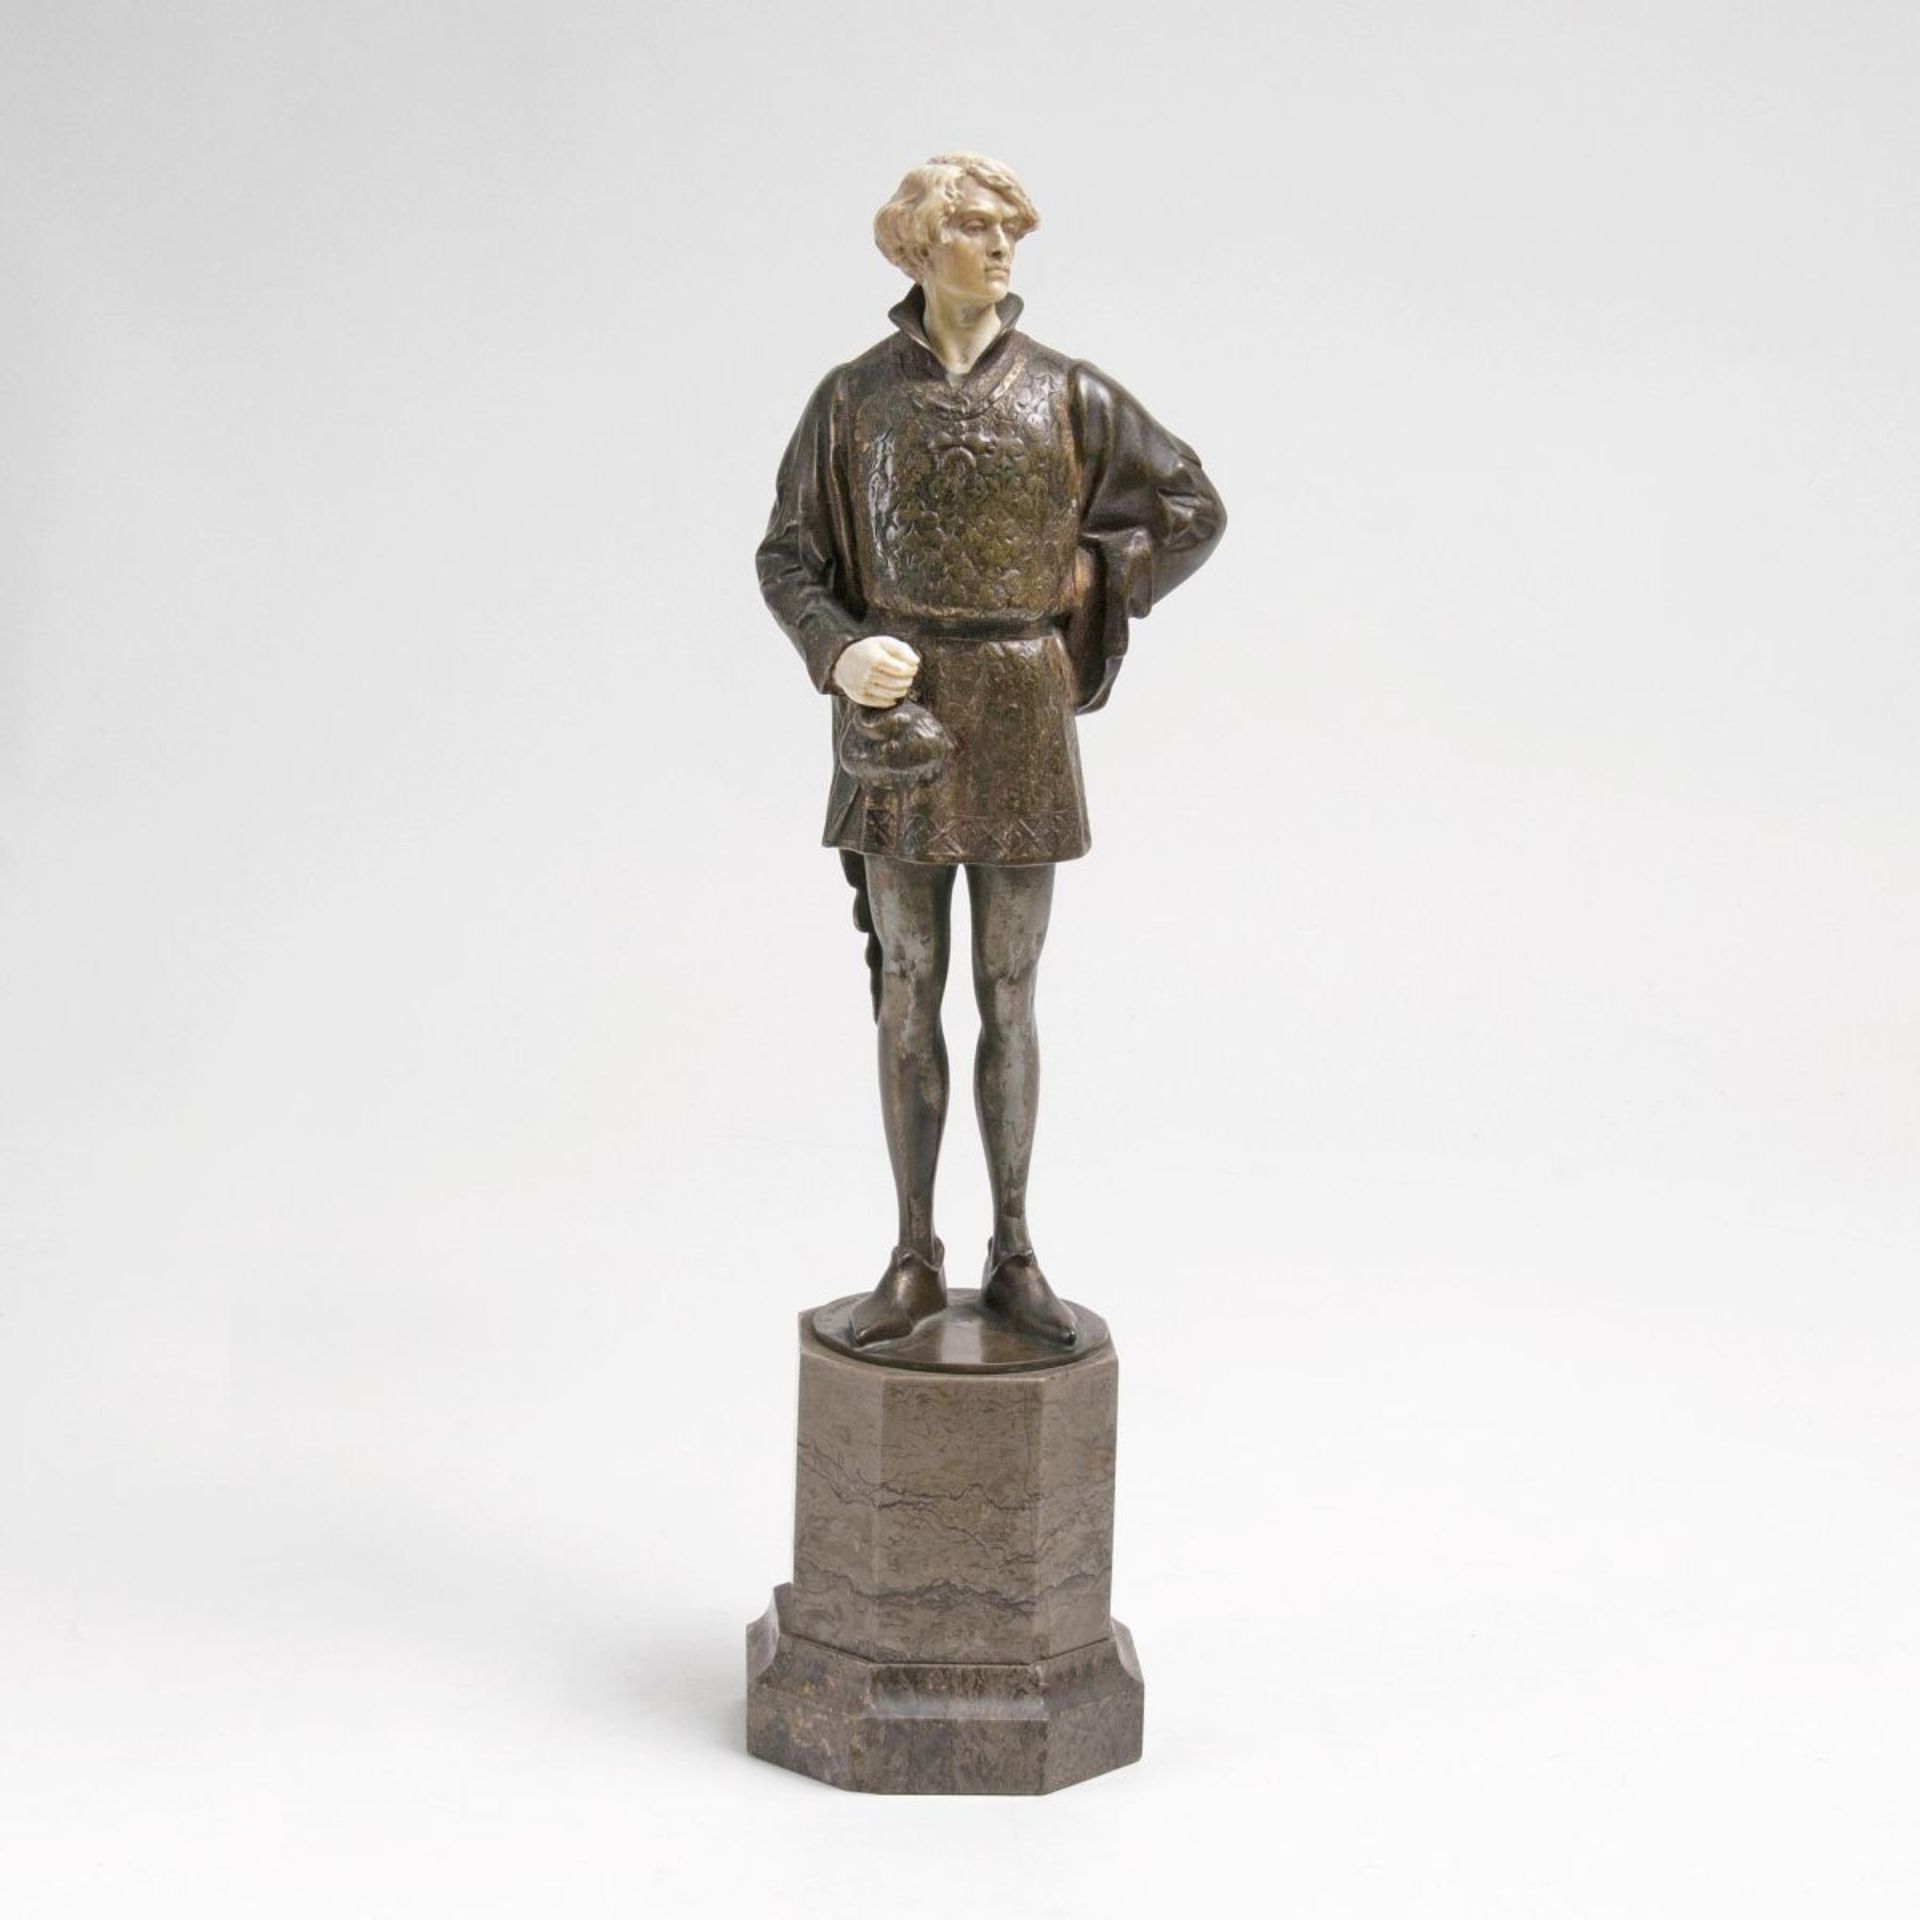 Marcuse, Rudolf(Berlin 1878 - London 1940)A Figure 'Nobleman'Around 1910. Bronze, head and hands